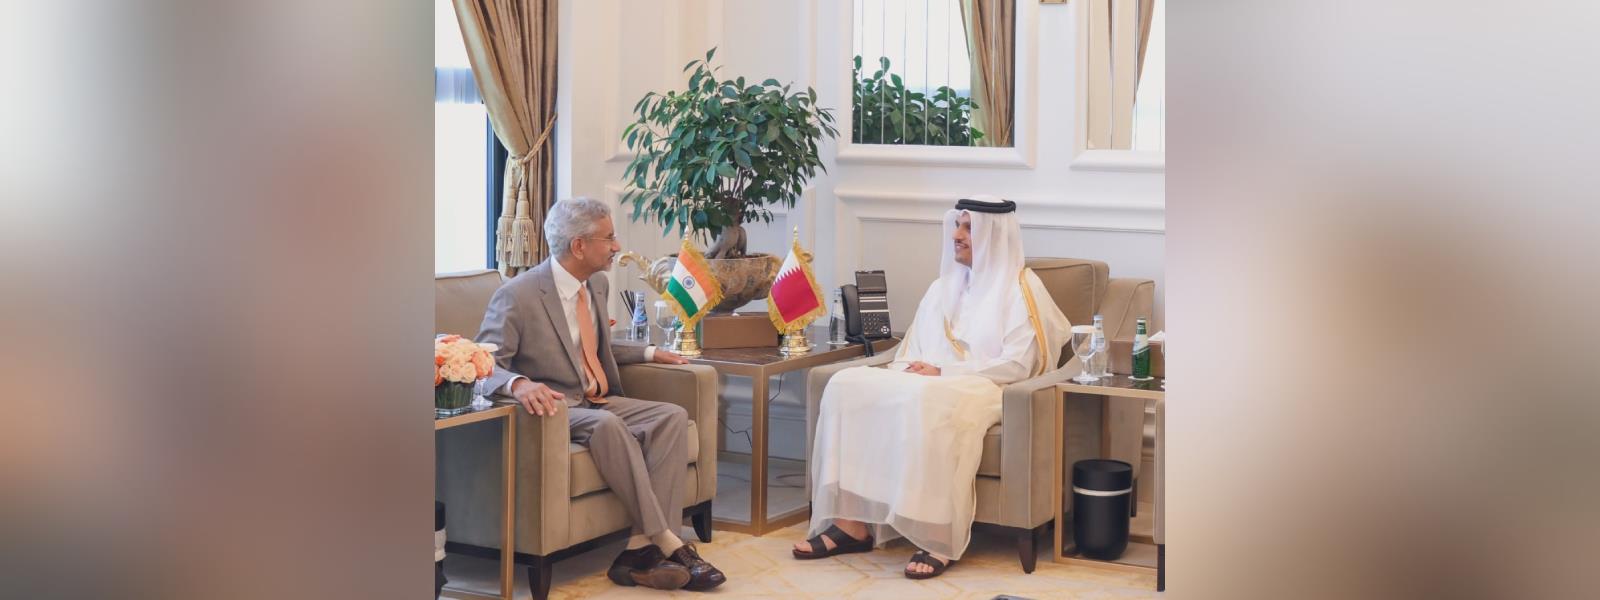 External Affairs Minister, Dr. S. Jaishankar met Prime Minister and Minister of Foreign Affairs of Qatar, H.E. Sheikh Mohammed bin Abdulrahman bin Jassim Al Thani in Doha